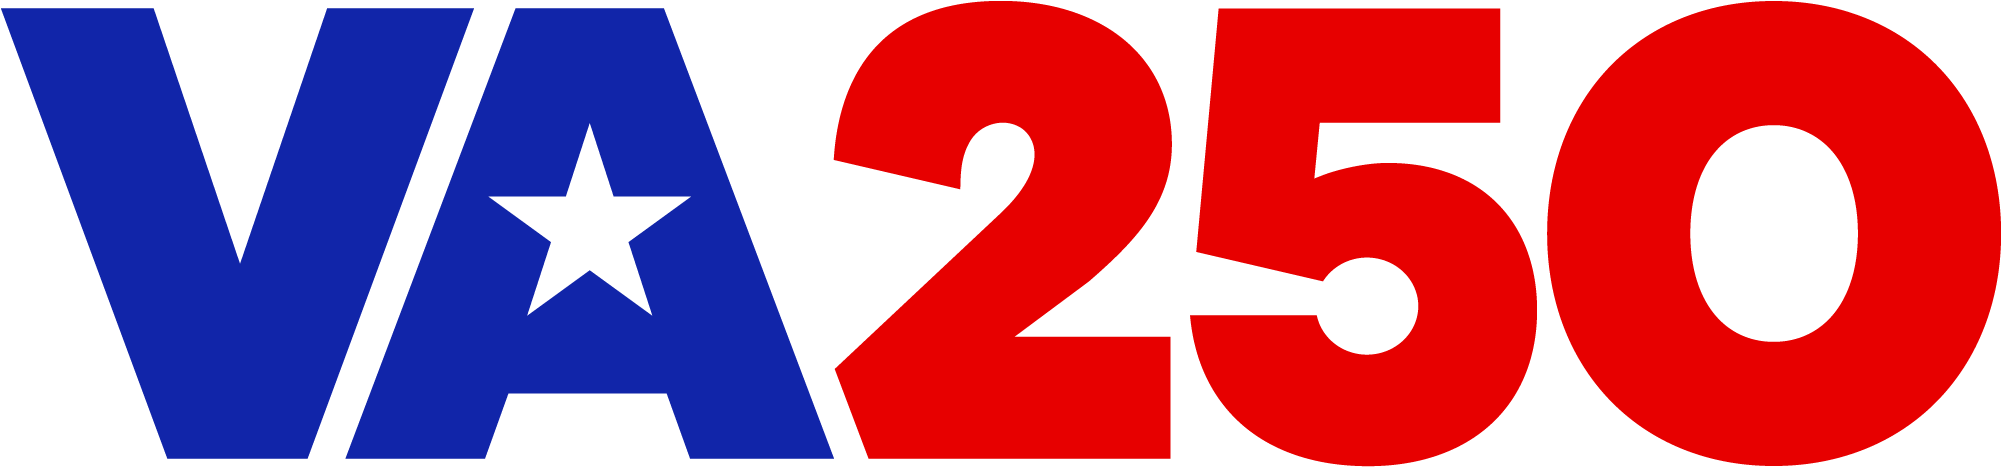 VA250 Full Color Logo RGB